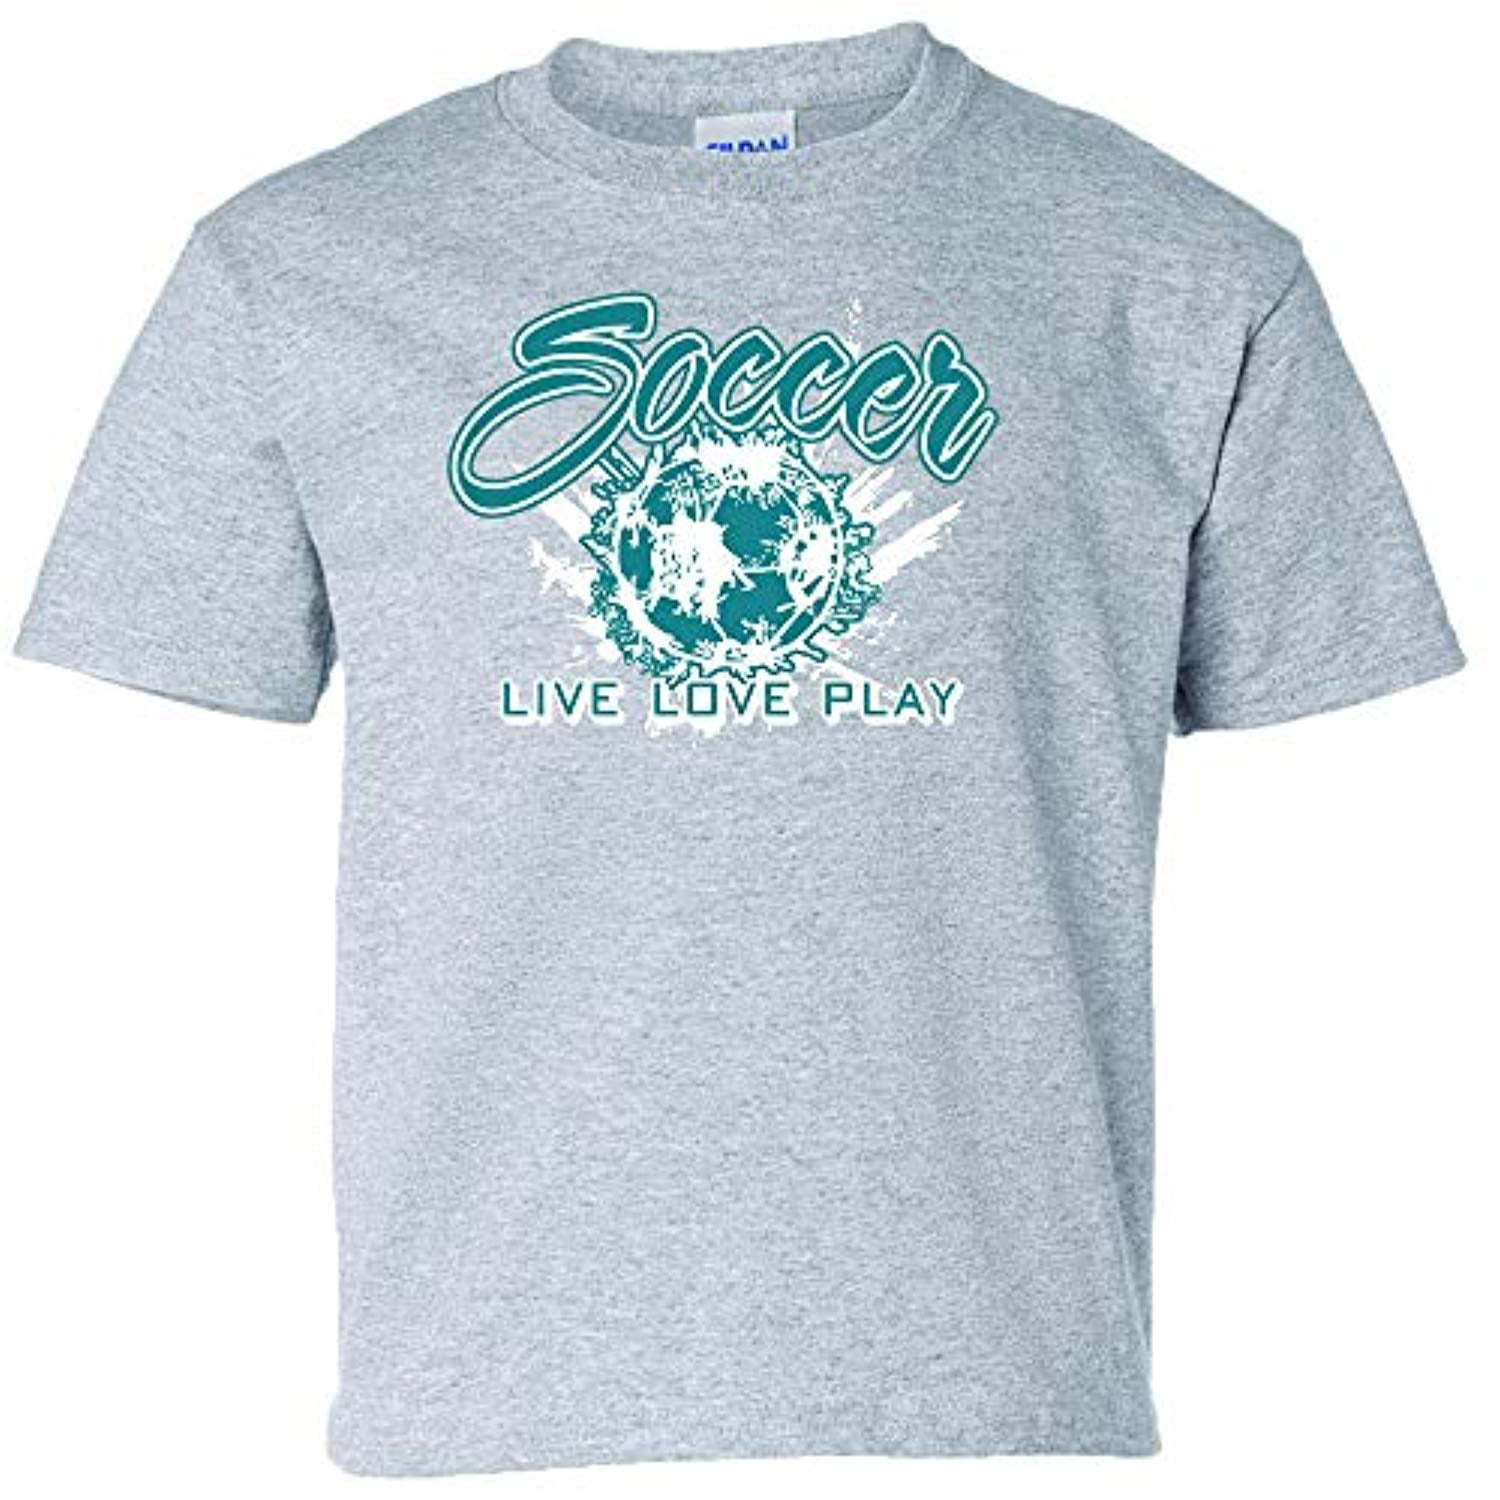  Icon Sports Mens Tottenham World Soccer Club Team Graphic Print  Short Sleeve Cotton T-Shirt (EST 1882, H.Grey, Small) : Sports & Outdoors